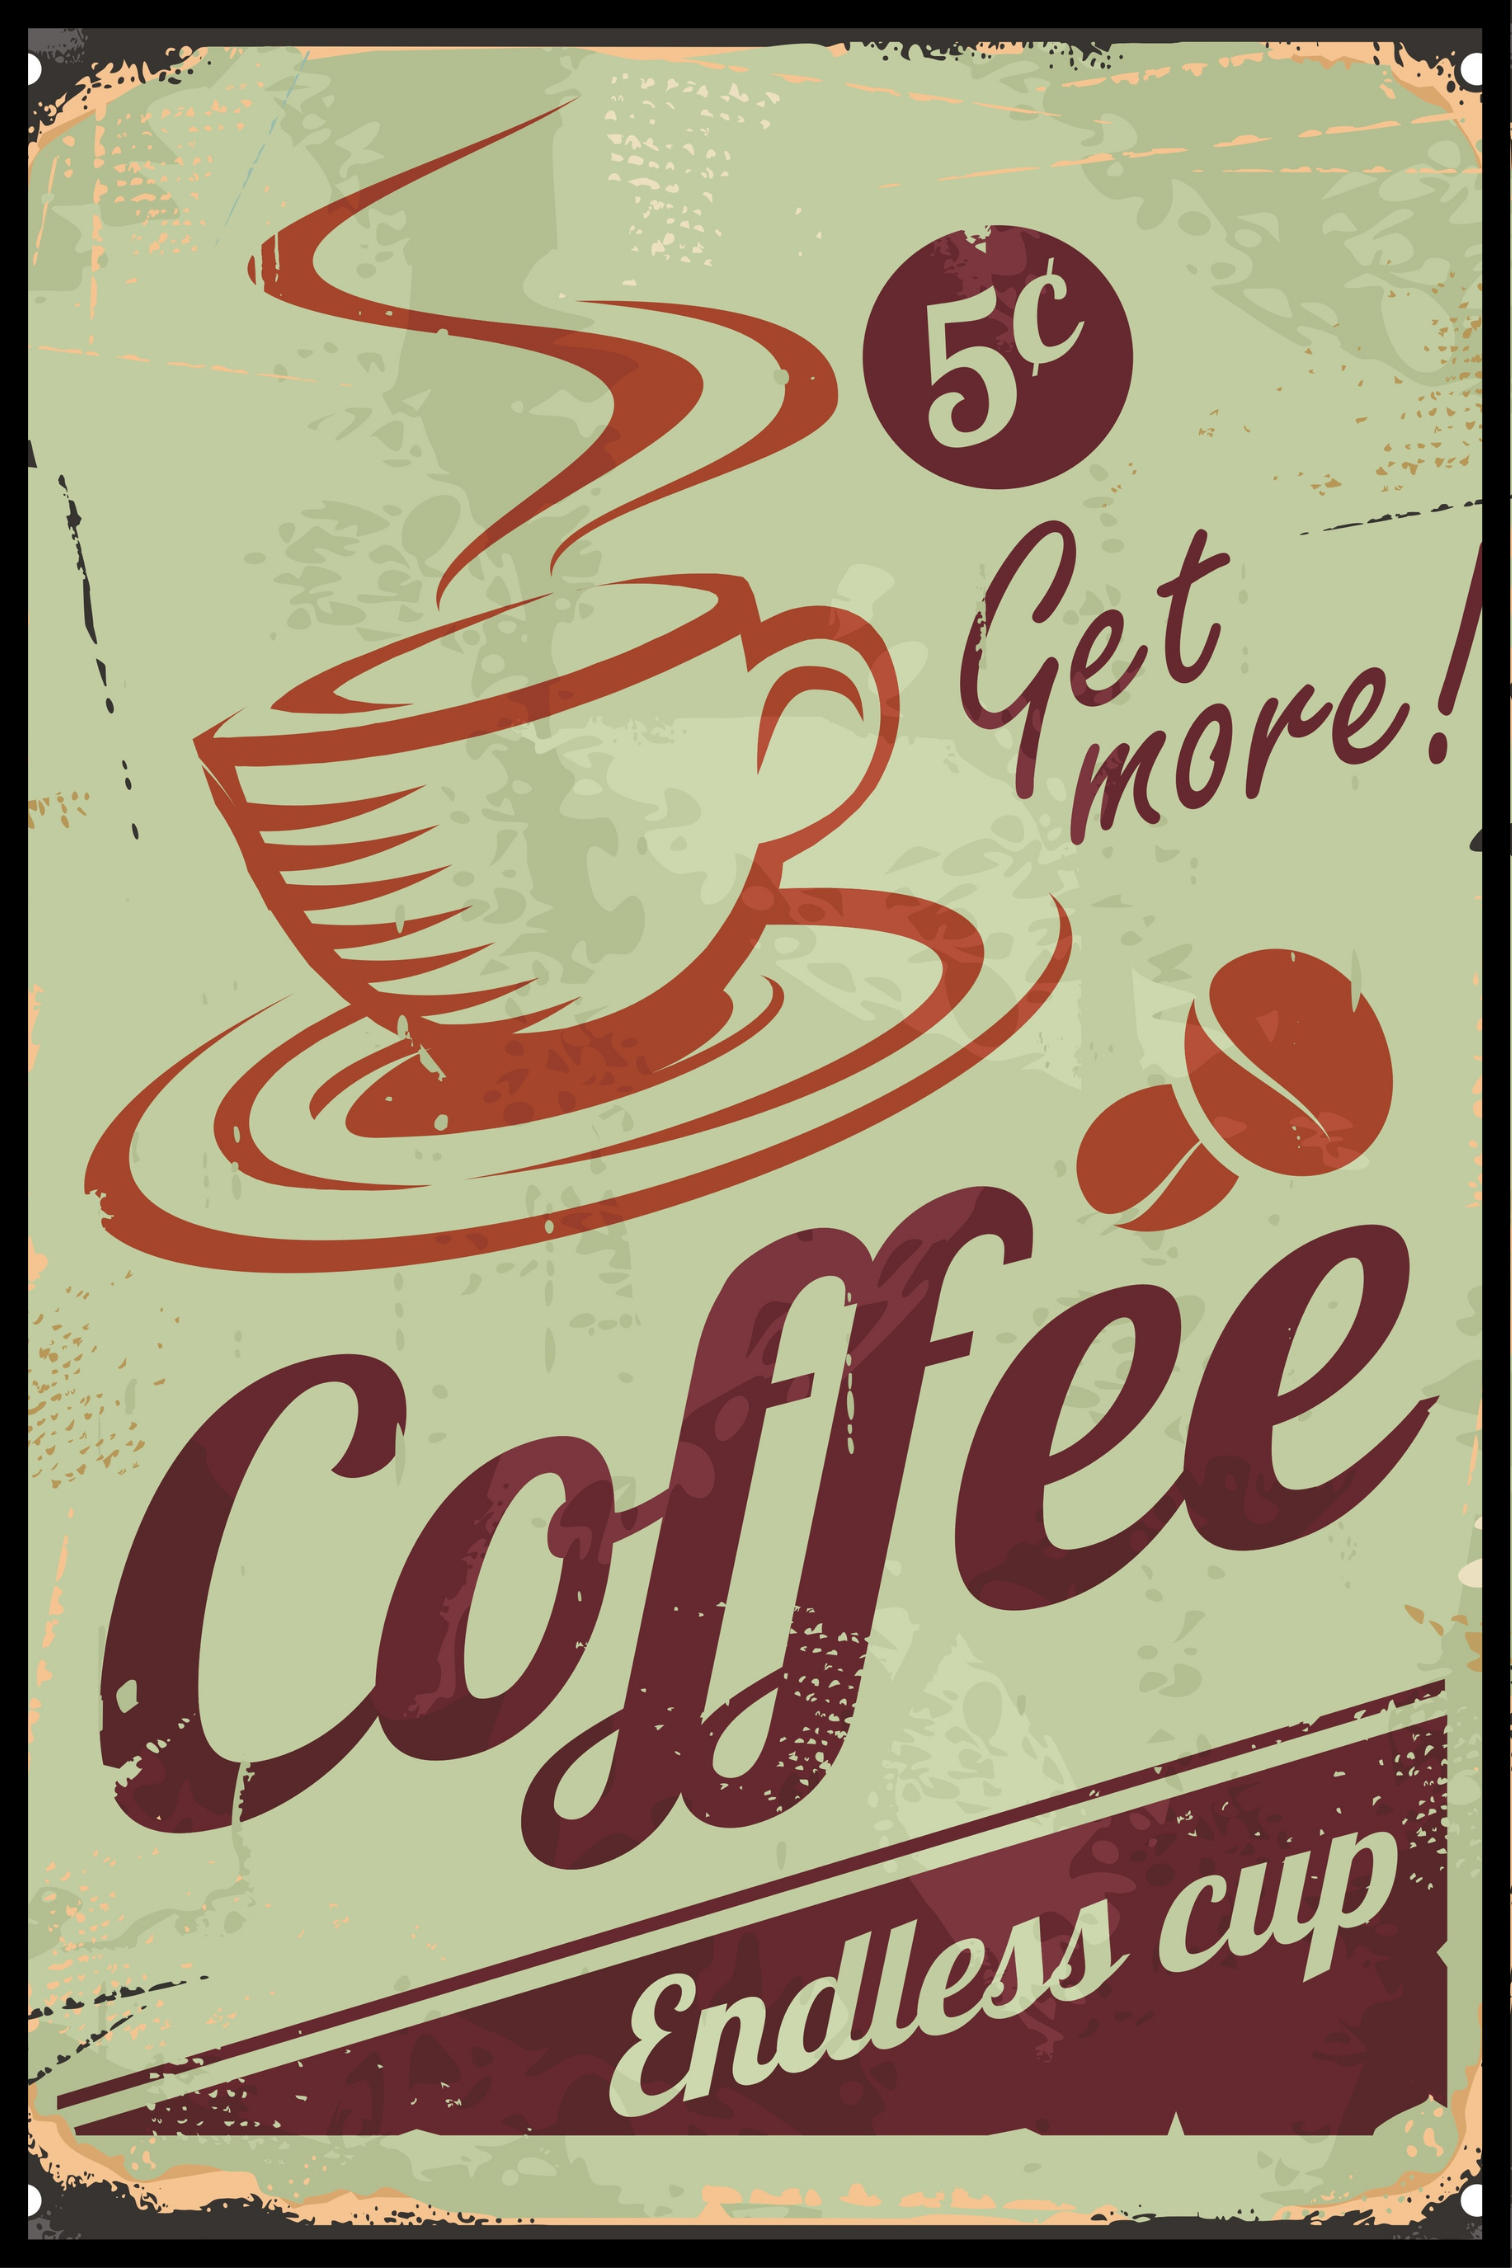 Retro kaffe tecken 2 affisch